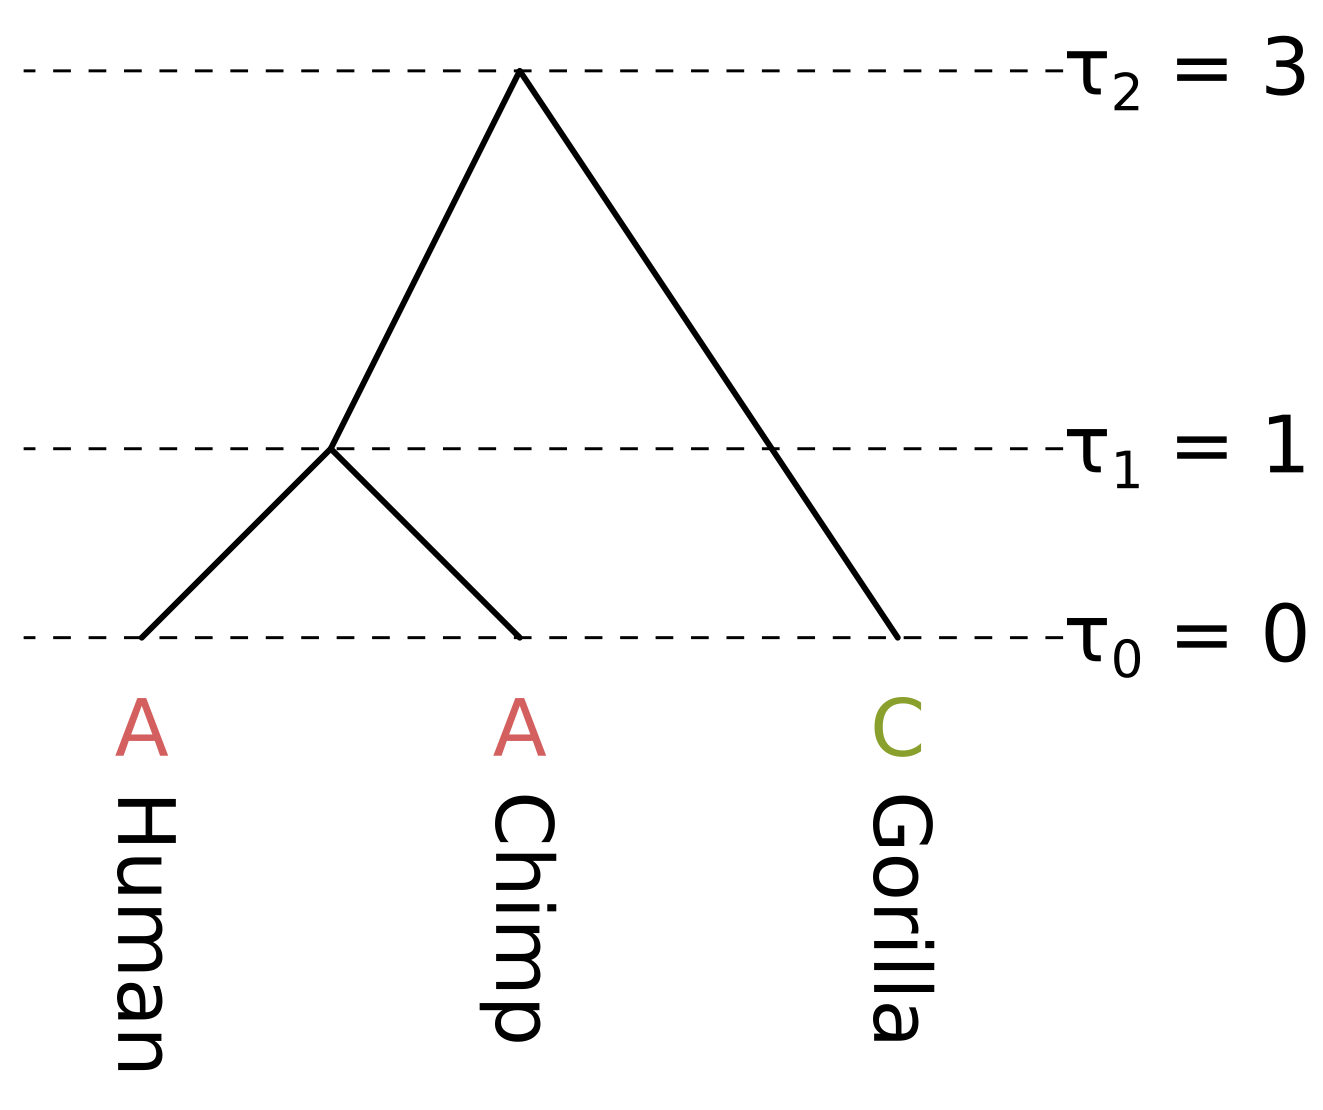 Example ultrametric tree